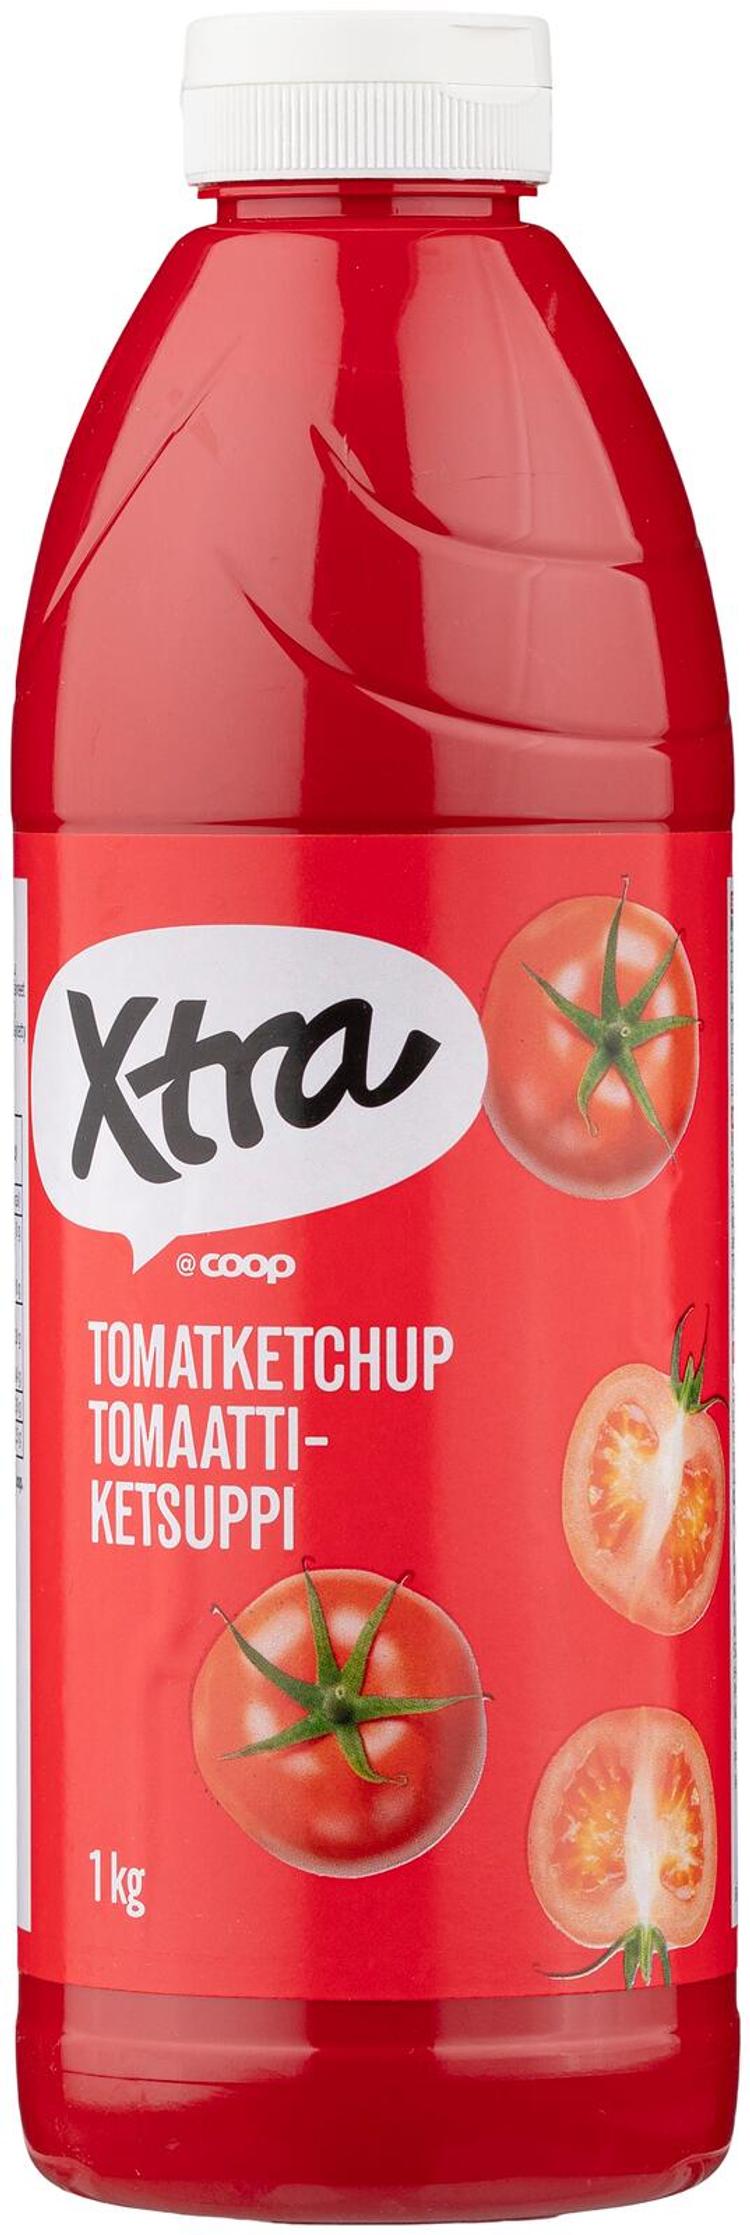 Xtra Tomaattiketsuppi 1 kg